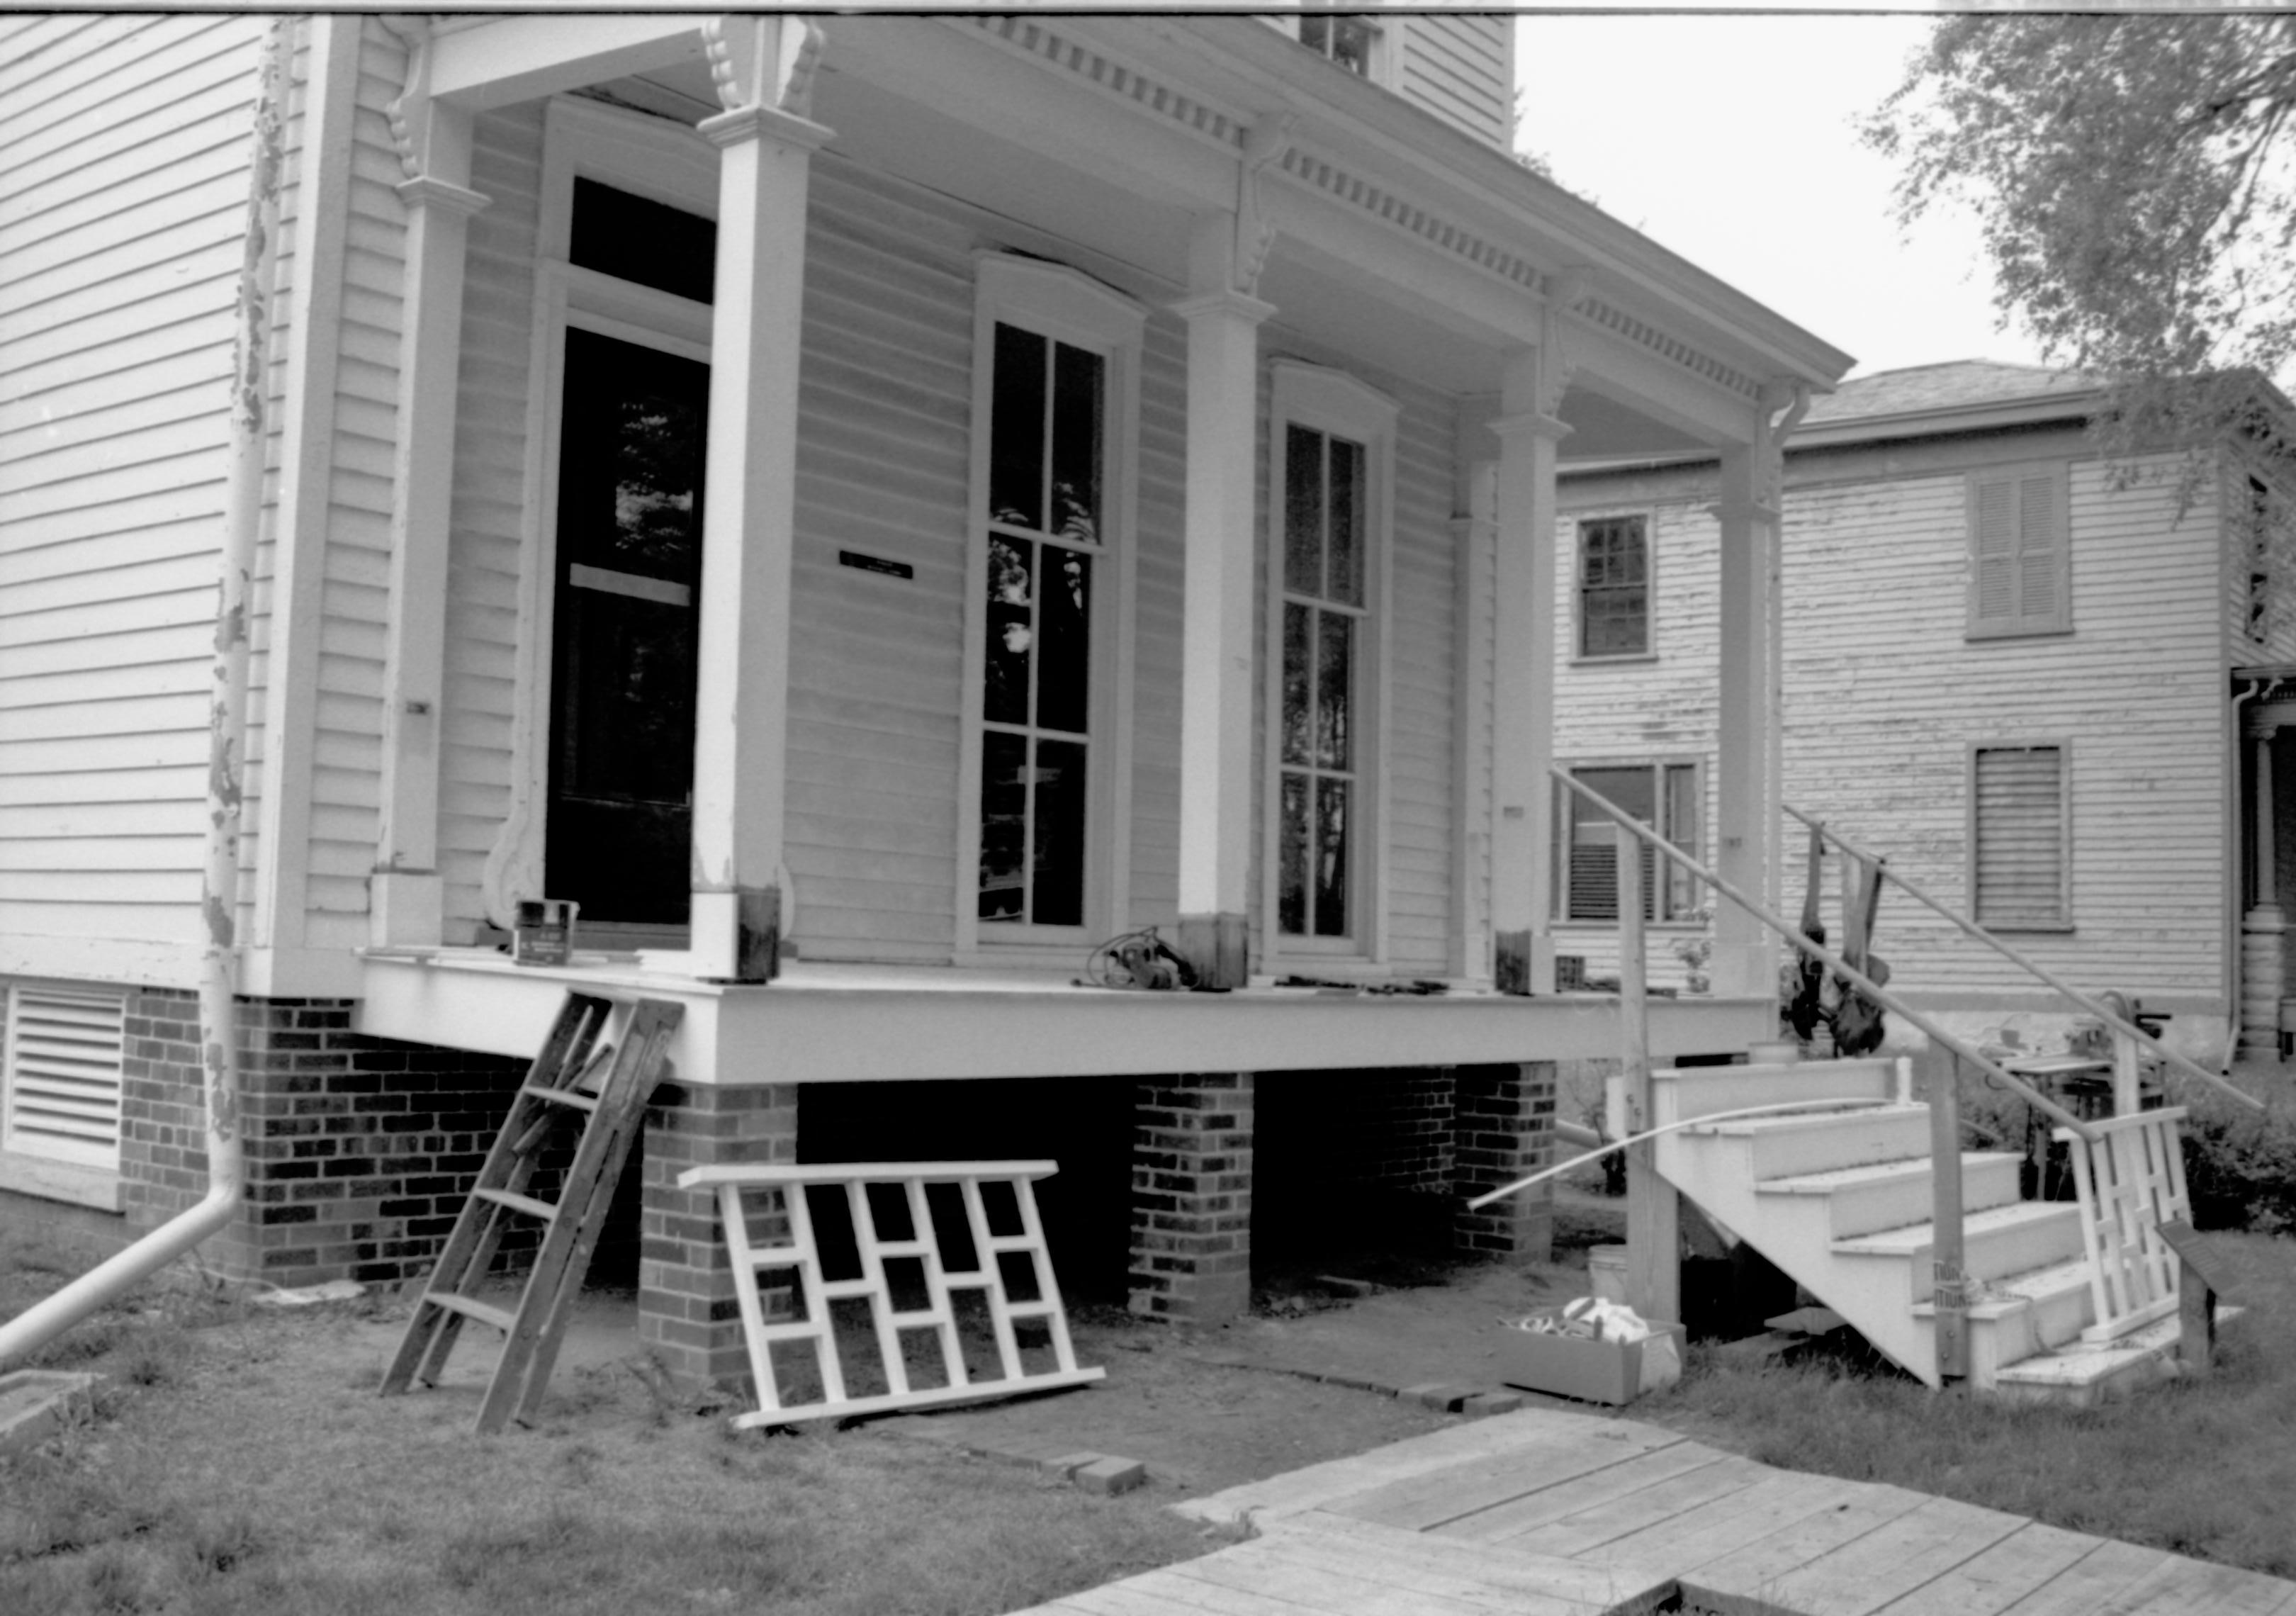 New porch LIHO NHS- Shutt House, HS-17, Roll #2 Neg 8 Shutt House, restoration